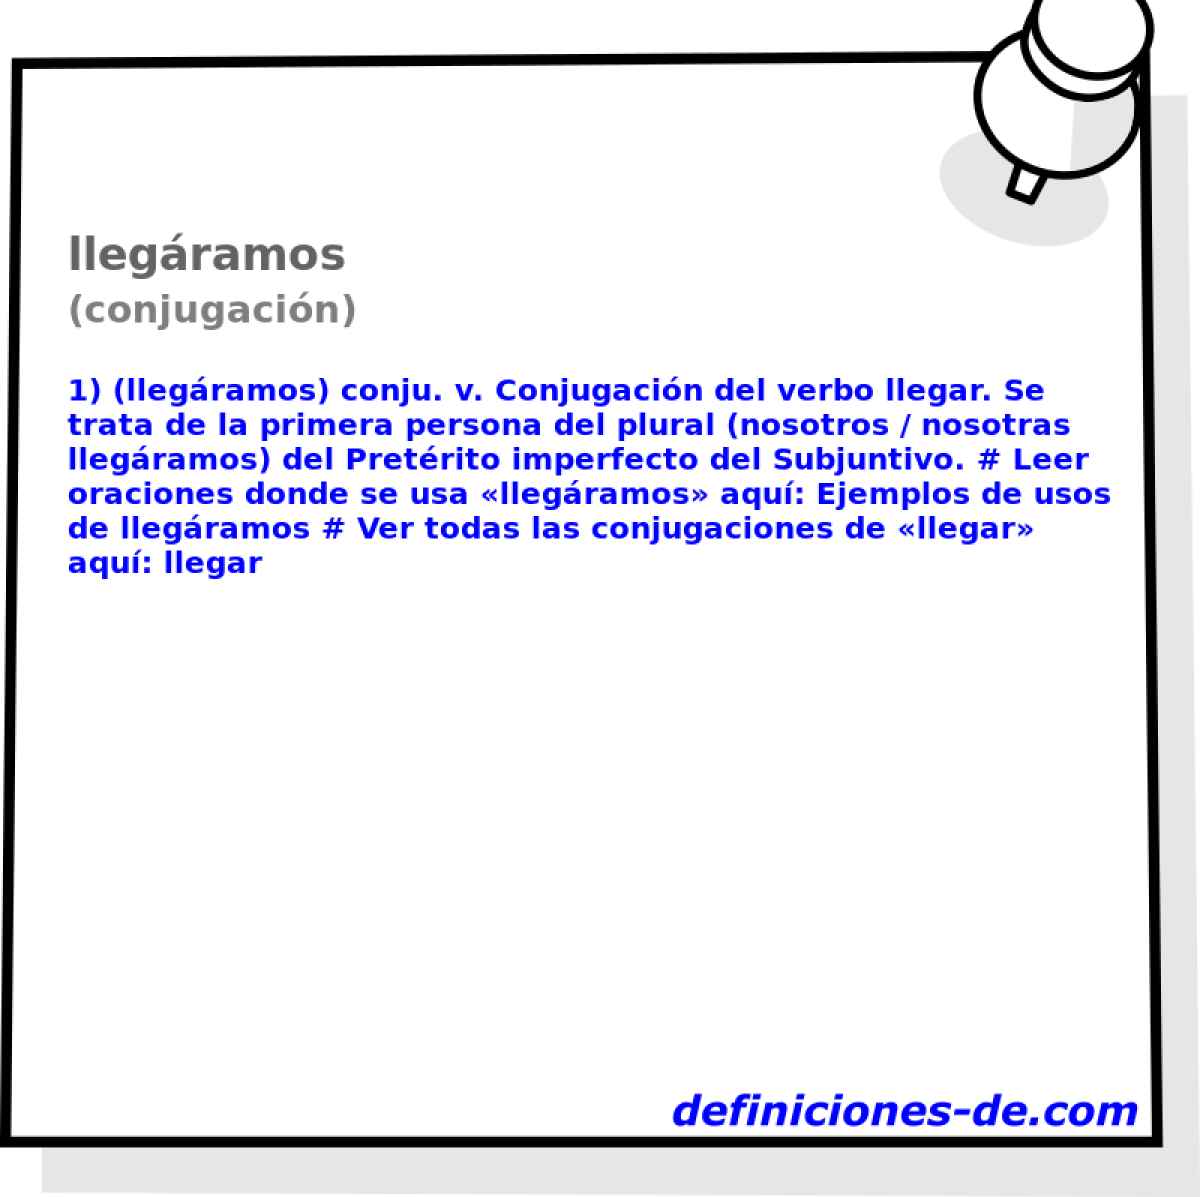 llegramos (conjugacin)